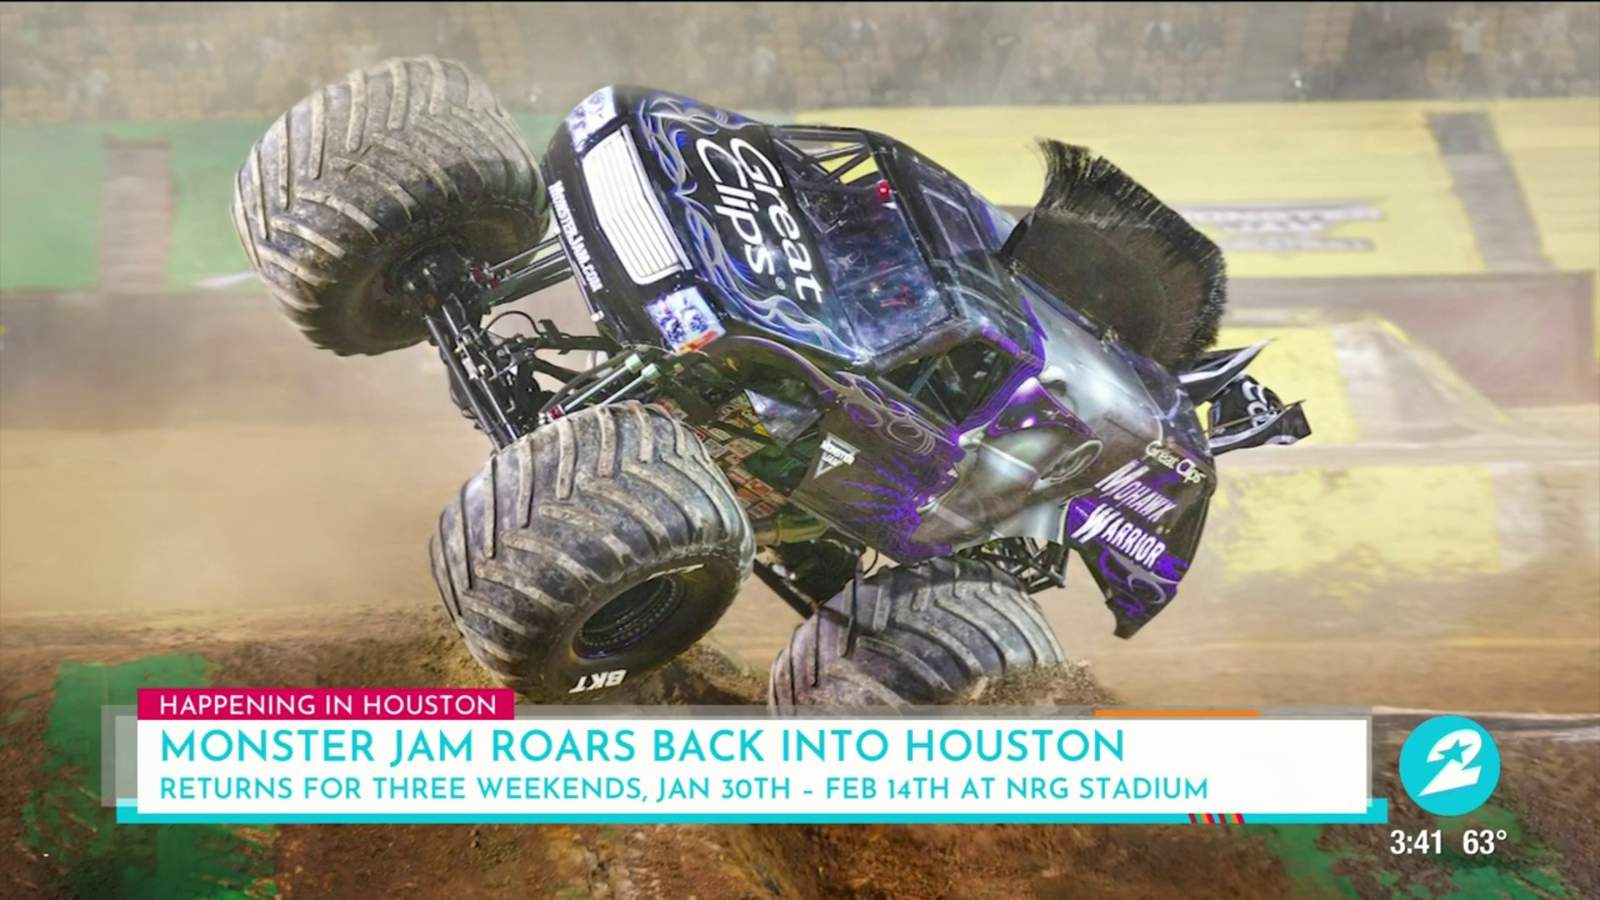 Monster Jam roars back into Houston for three high-octane weekends at NRG Stadium